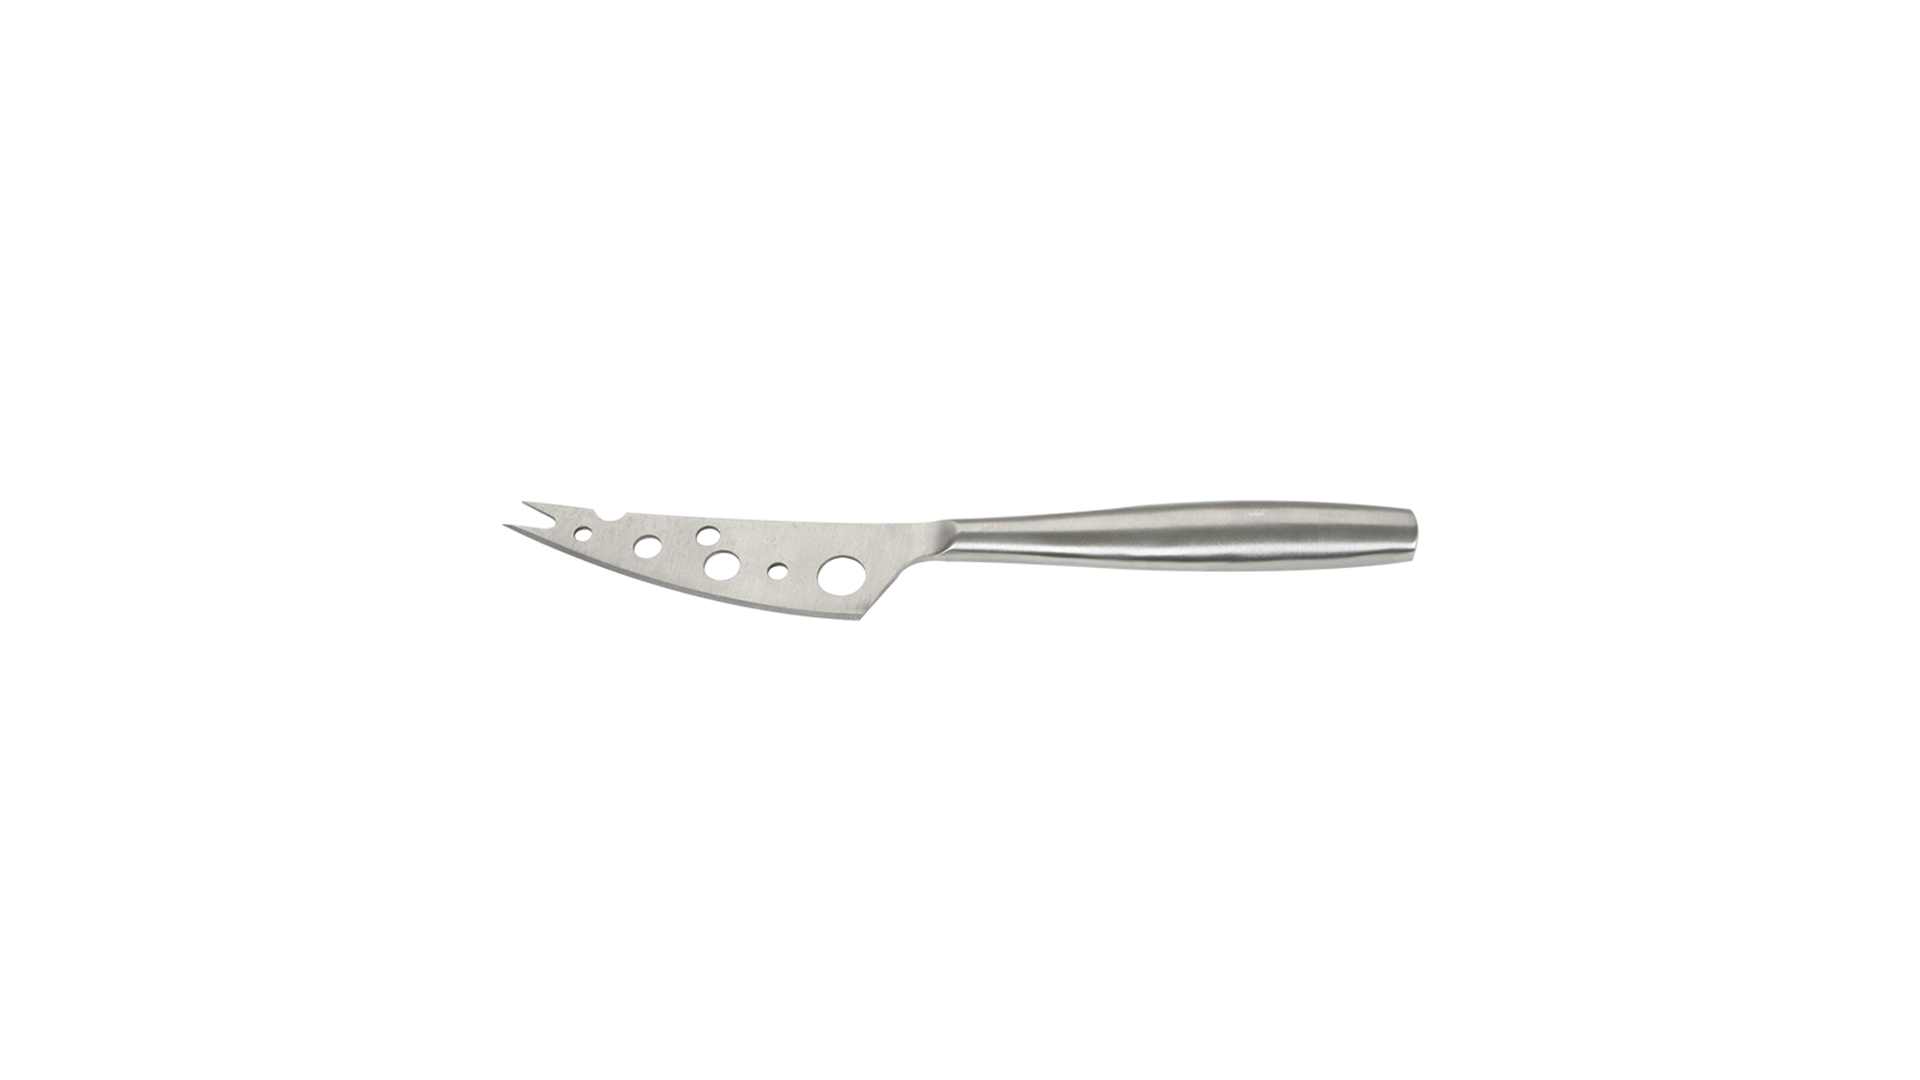 Нож для мягкого сыра Boska Копенгаген 29х8 см, сталь нержавеющая